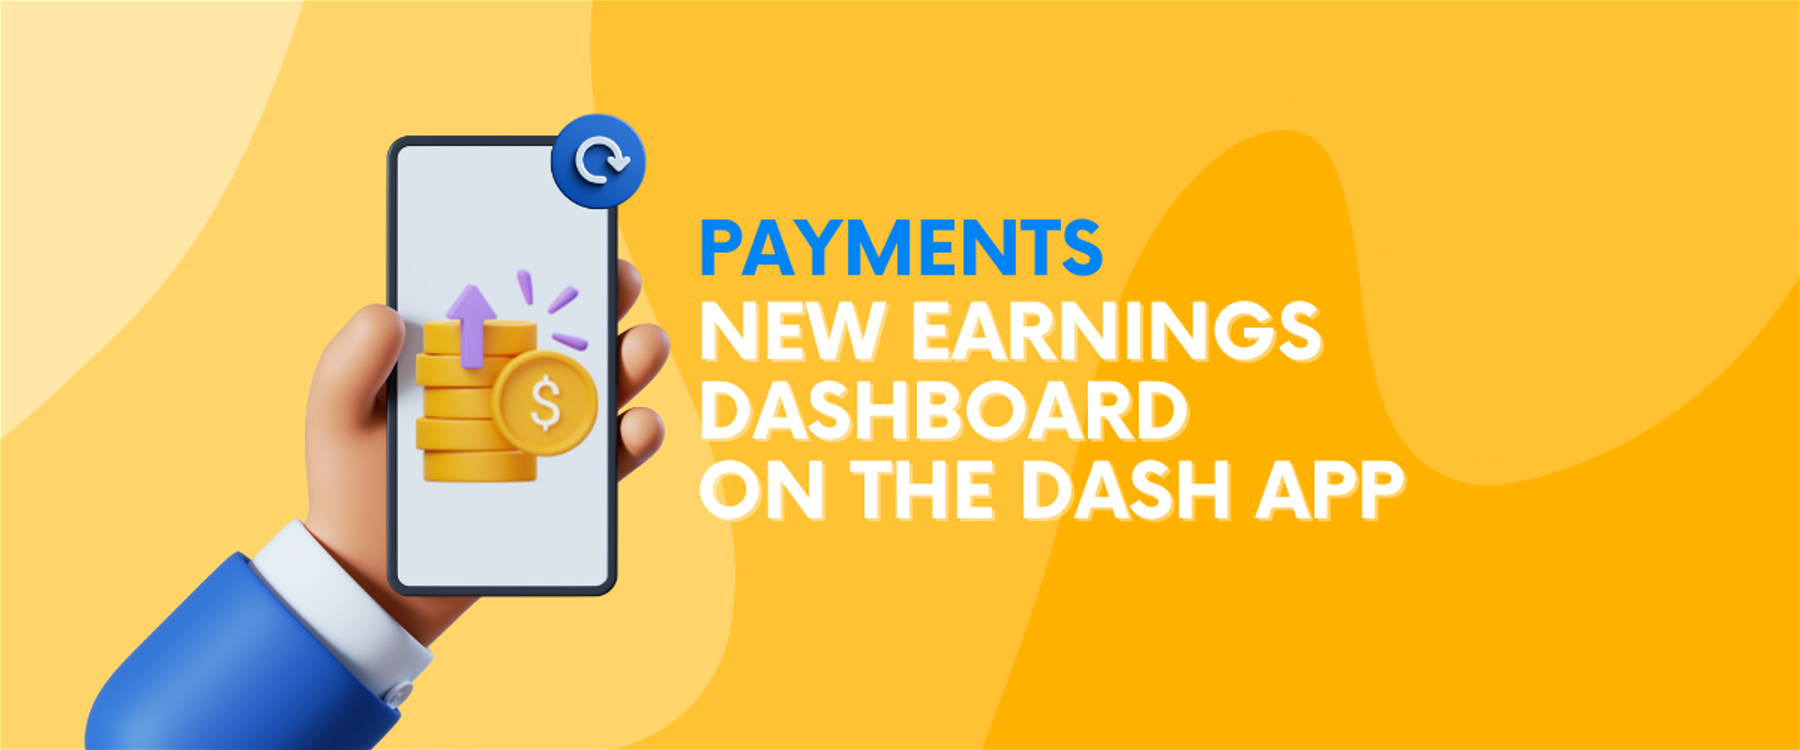 New Earnings Dashboard On Dash App!